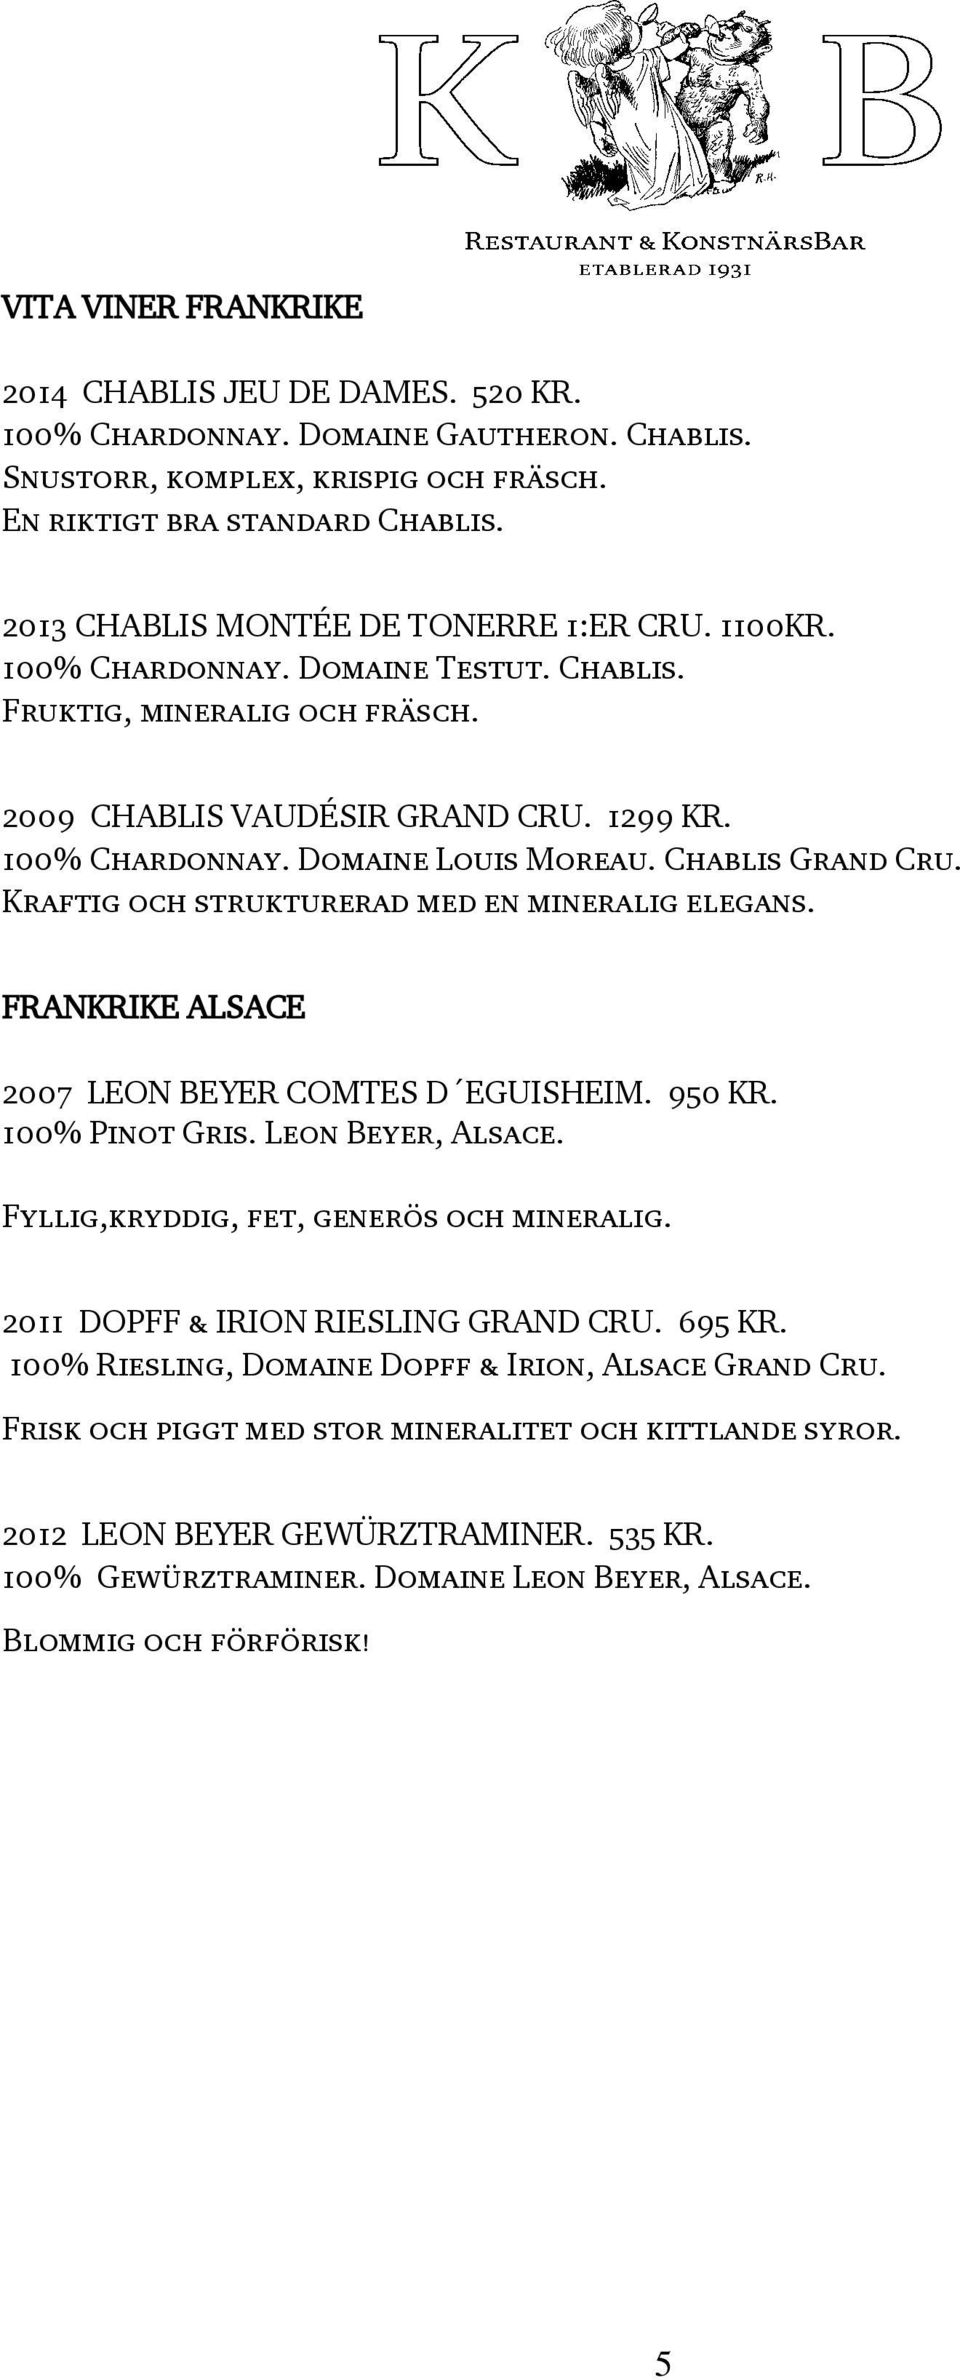 Chablis Grand Cru. Kraftig och strukturerad med en mineralig elegans. FRANKRIKE ALSACE 2007 LEON BEYER COMTES D EGUISHEIM. 950 KR. 100% Pinot Gris. Leon Beyer, Alsace.